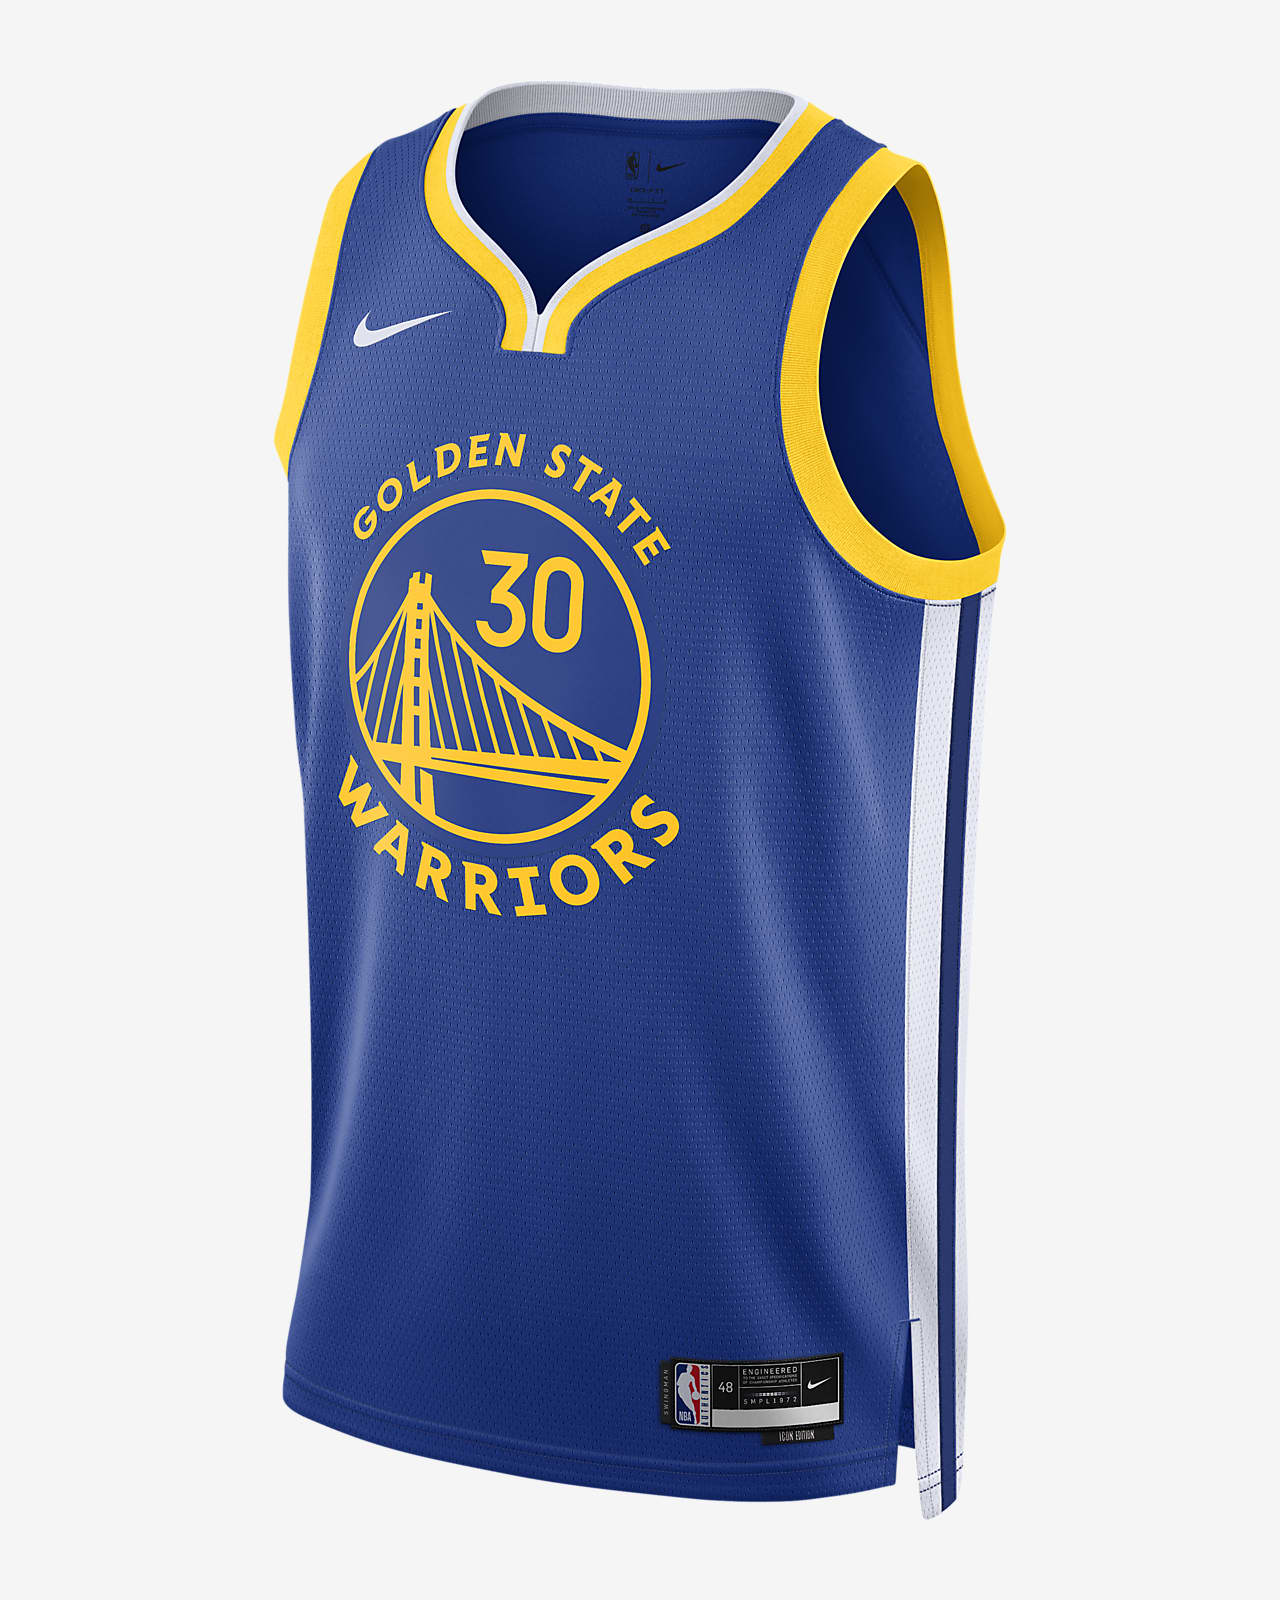 Golden State Warriors Nike City Edition Jersey - Skiller Shop